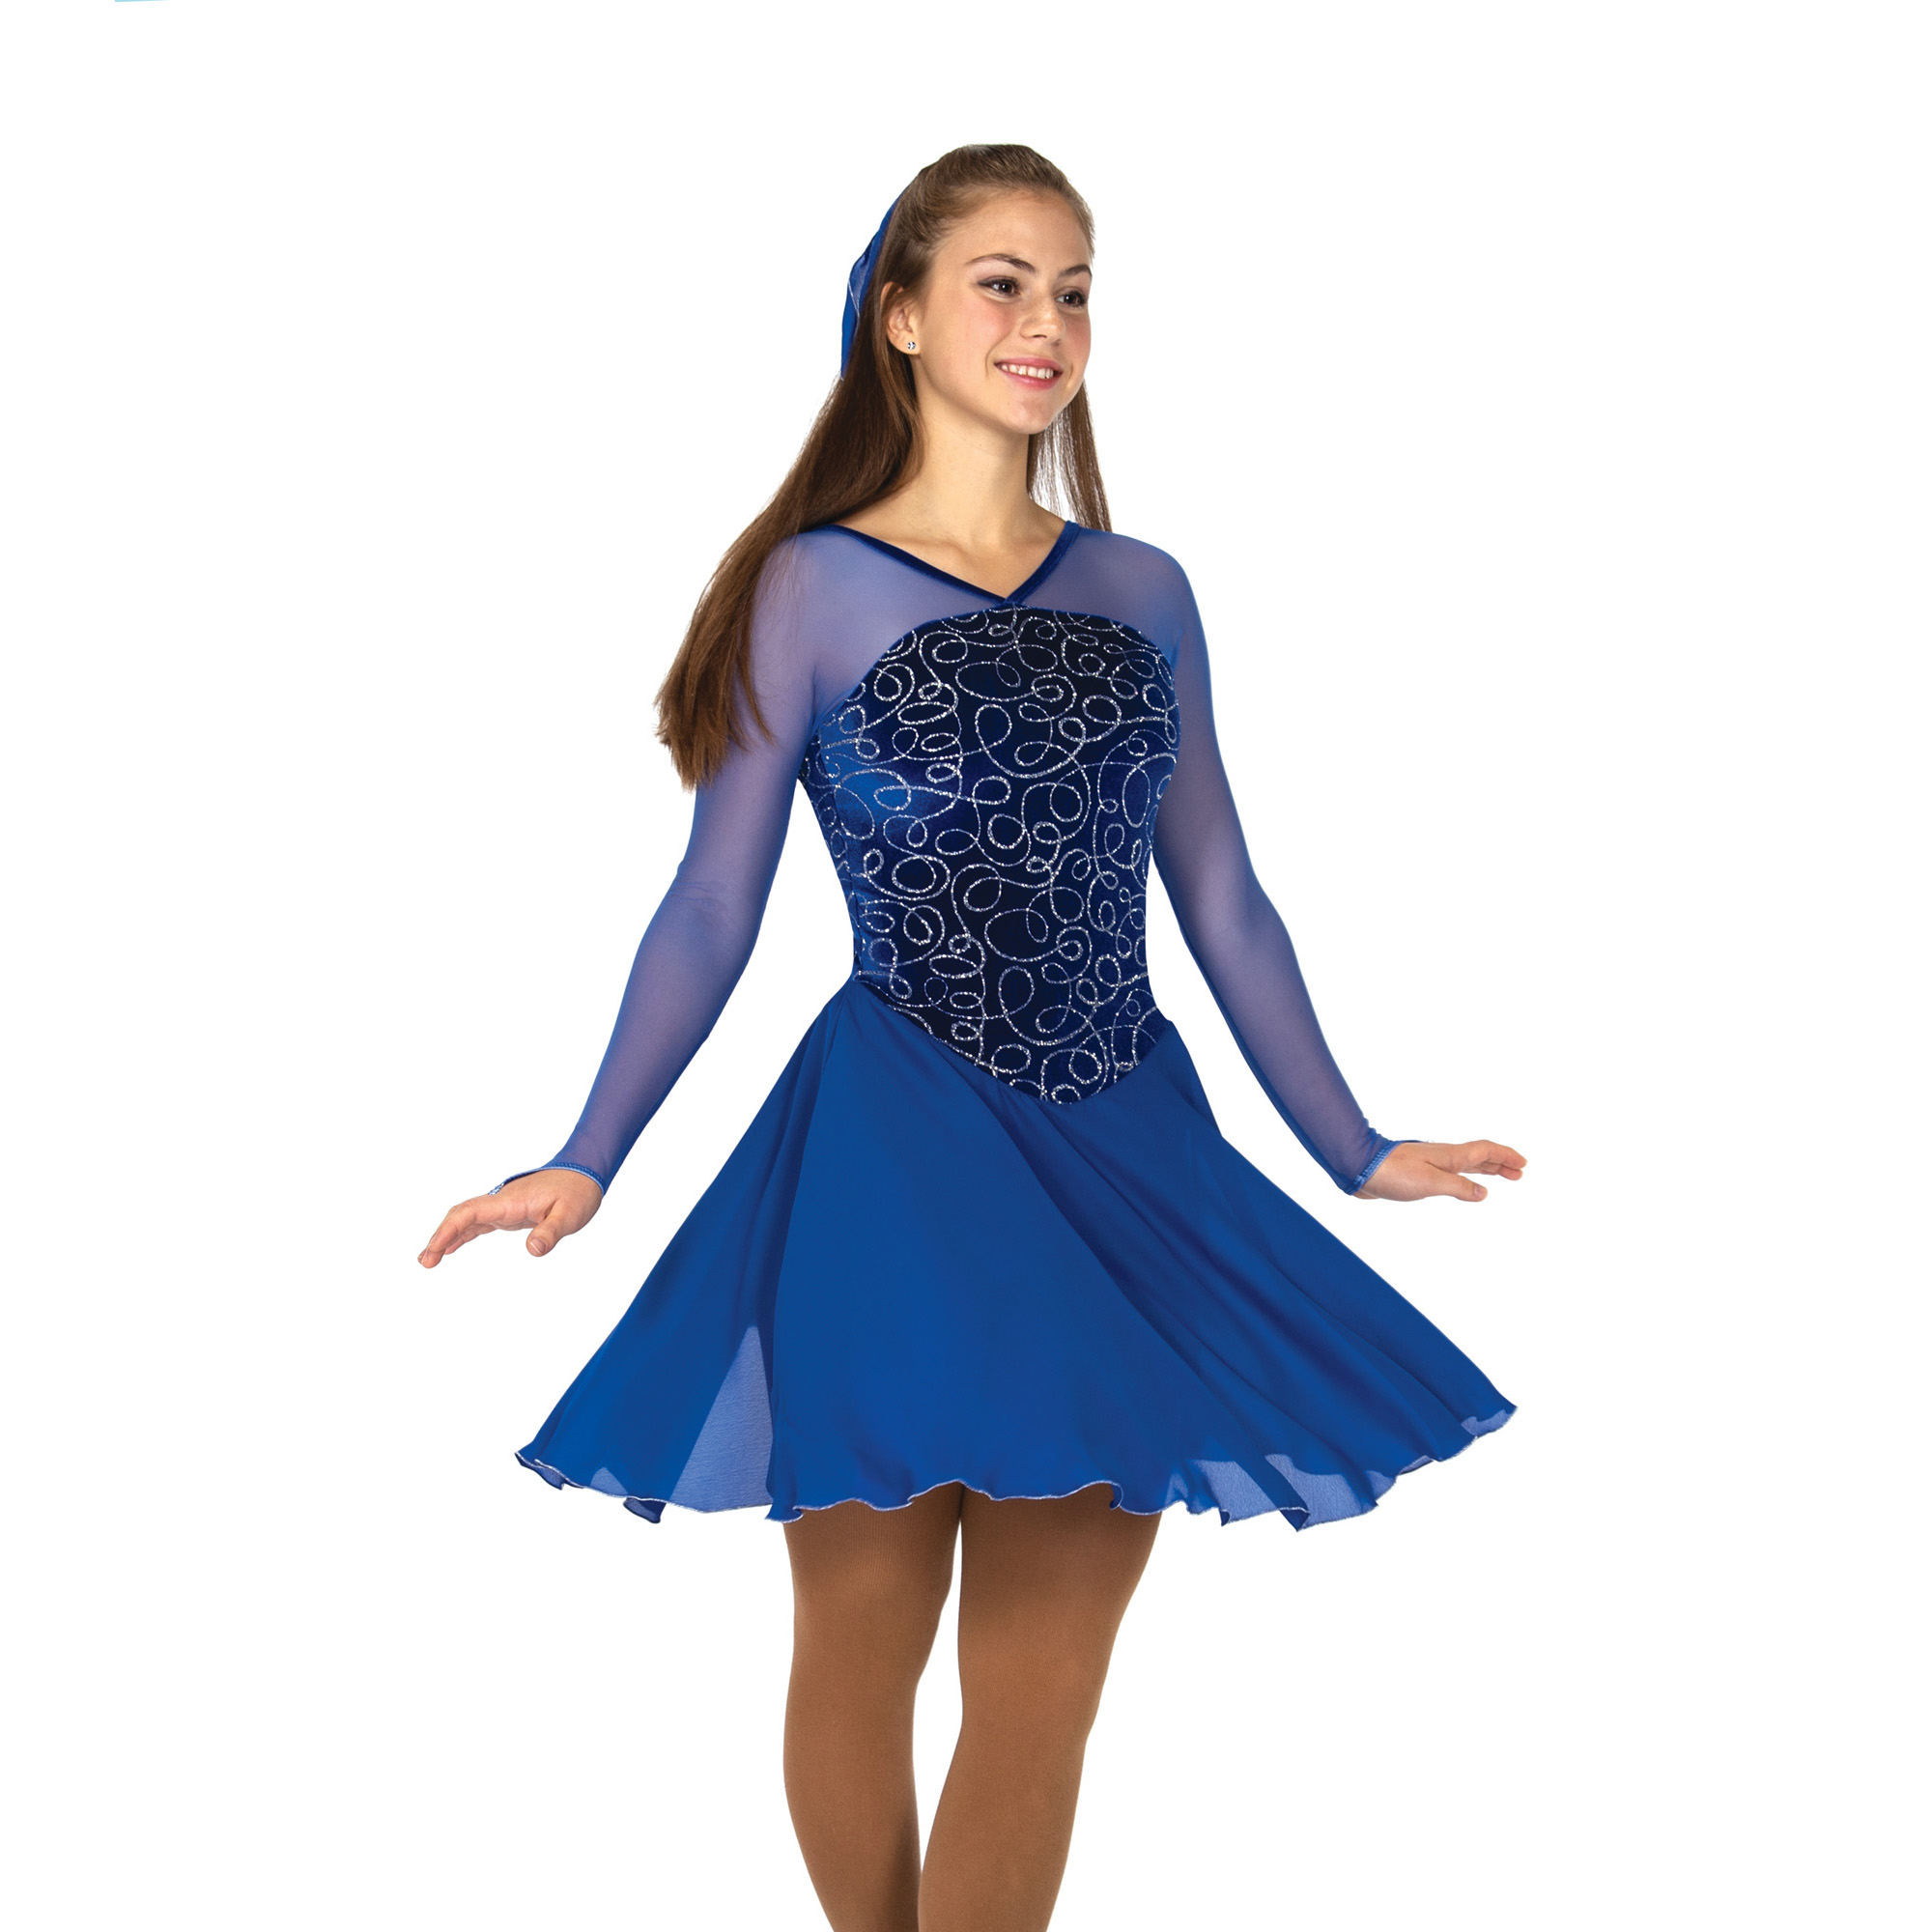 153 North Wind Waltz Dress - Cobalt Blue - Jerry's Skating World